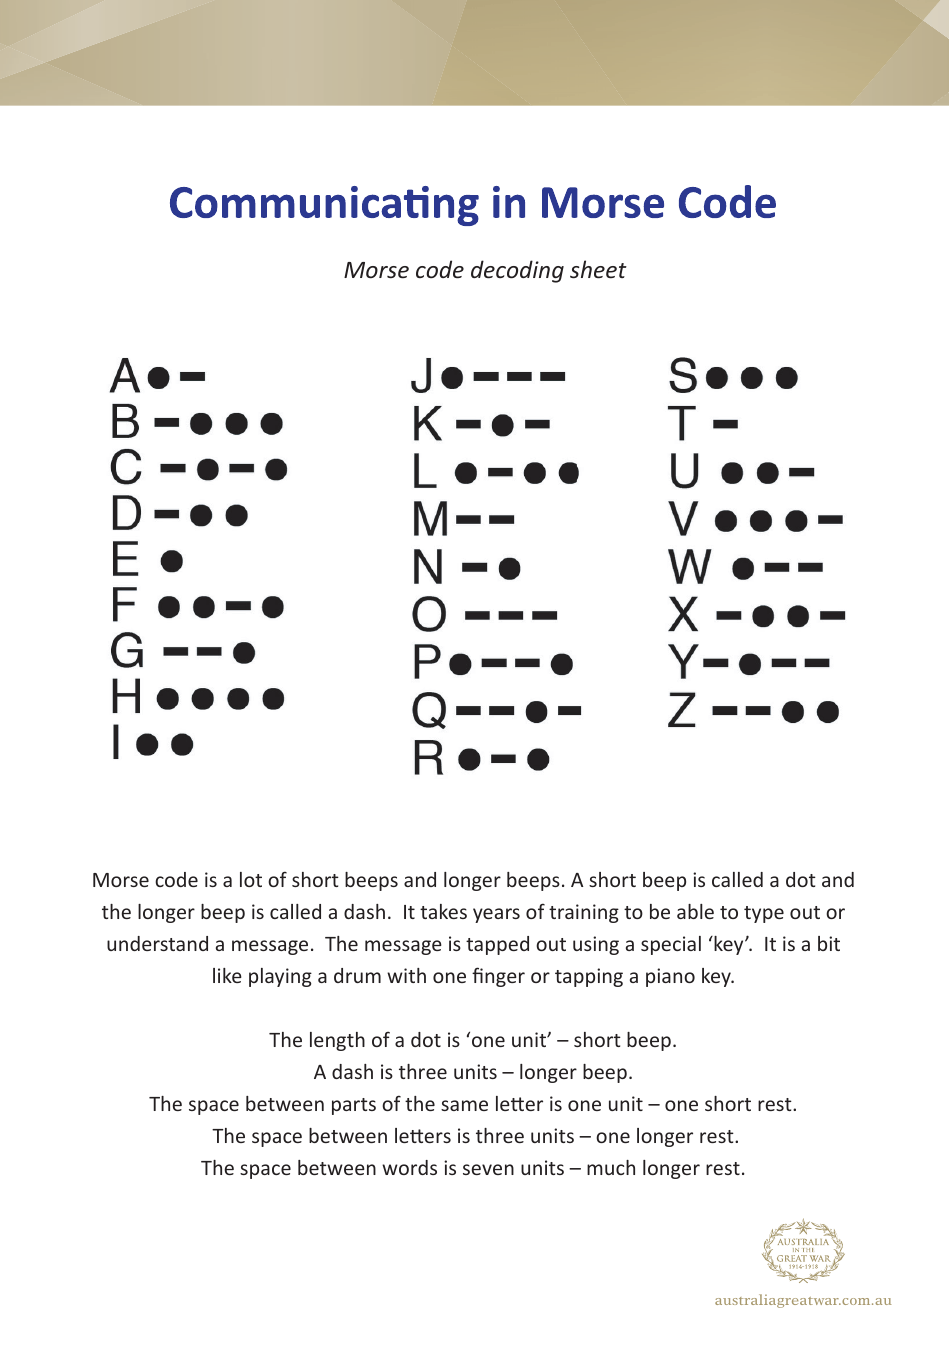 Morse Code Decoding Sheet - Australia Preview